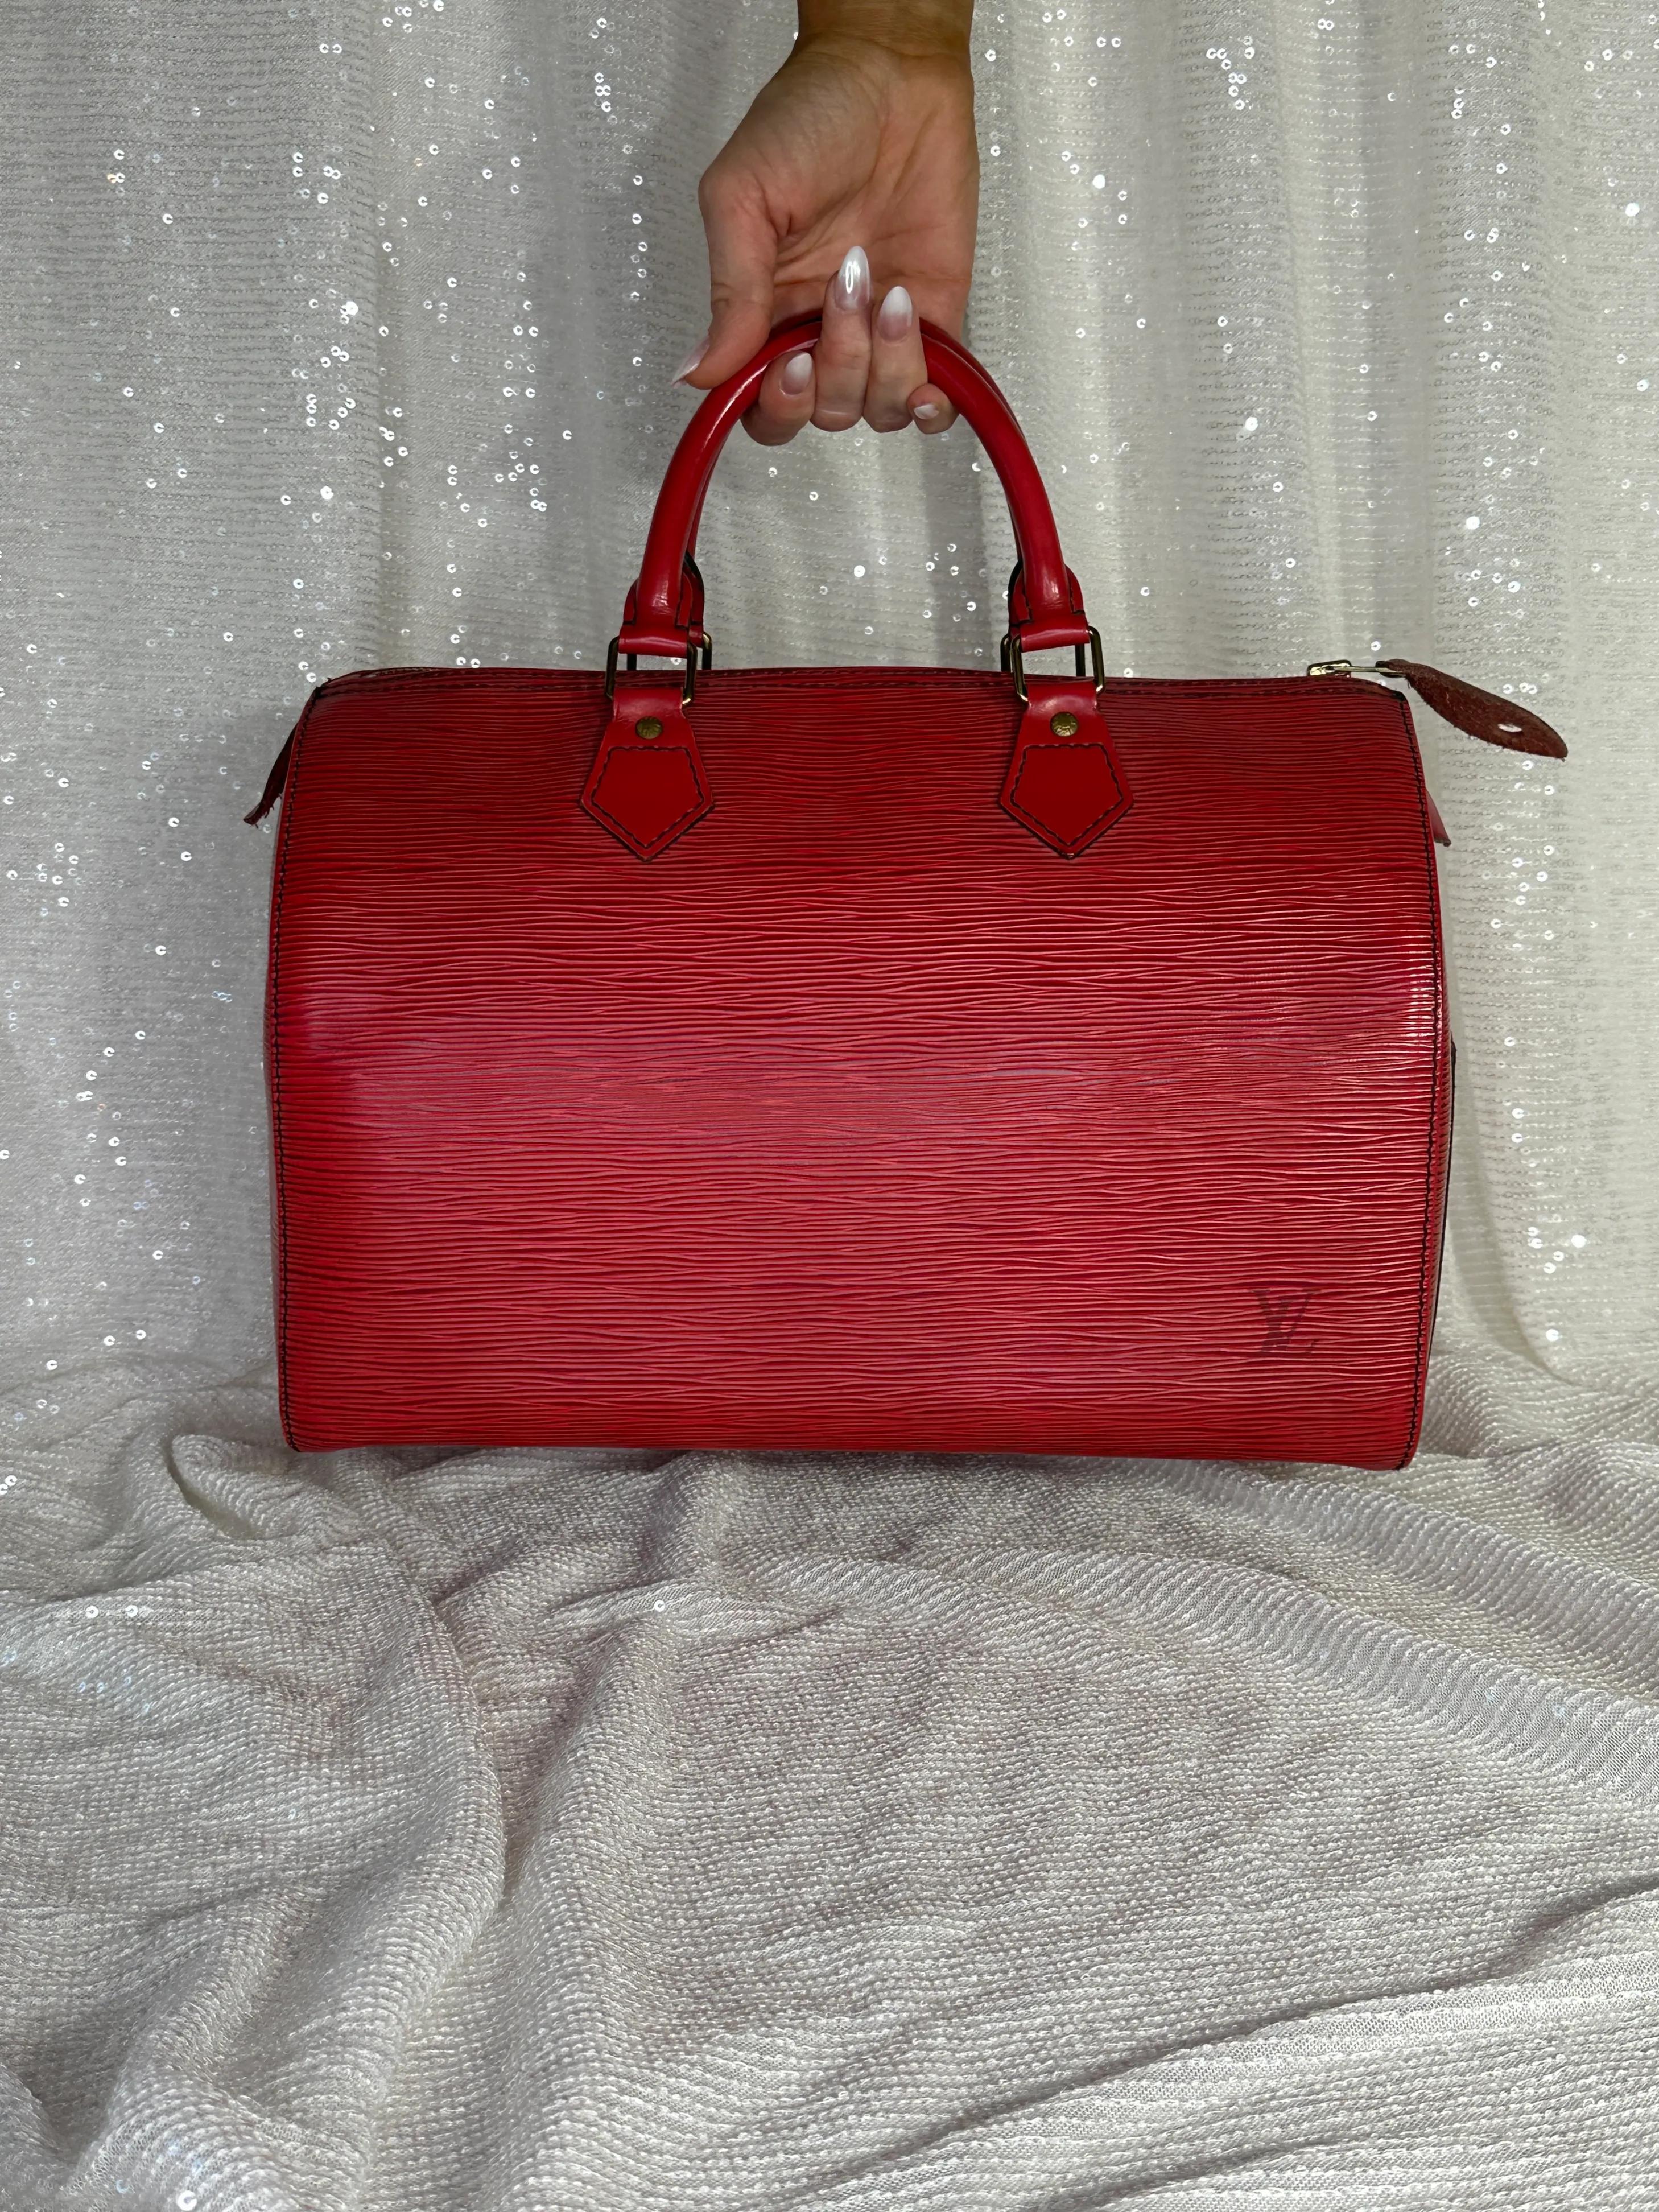 Louis Vuitton Speedy Epi Handbag in Red Epi Leather